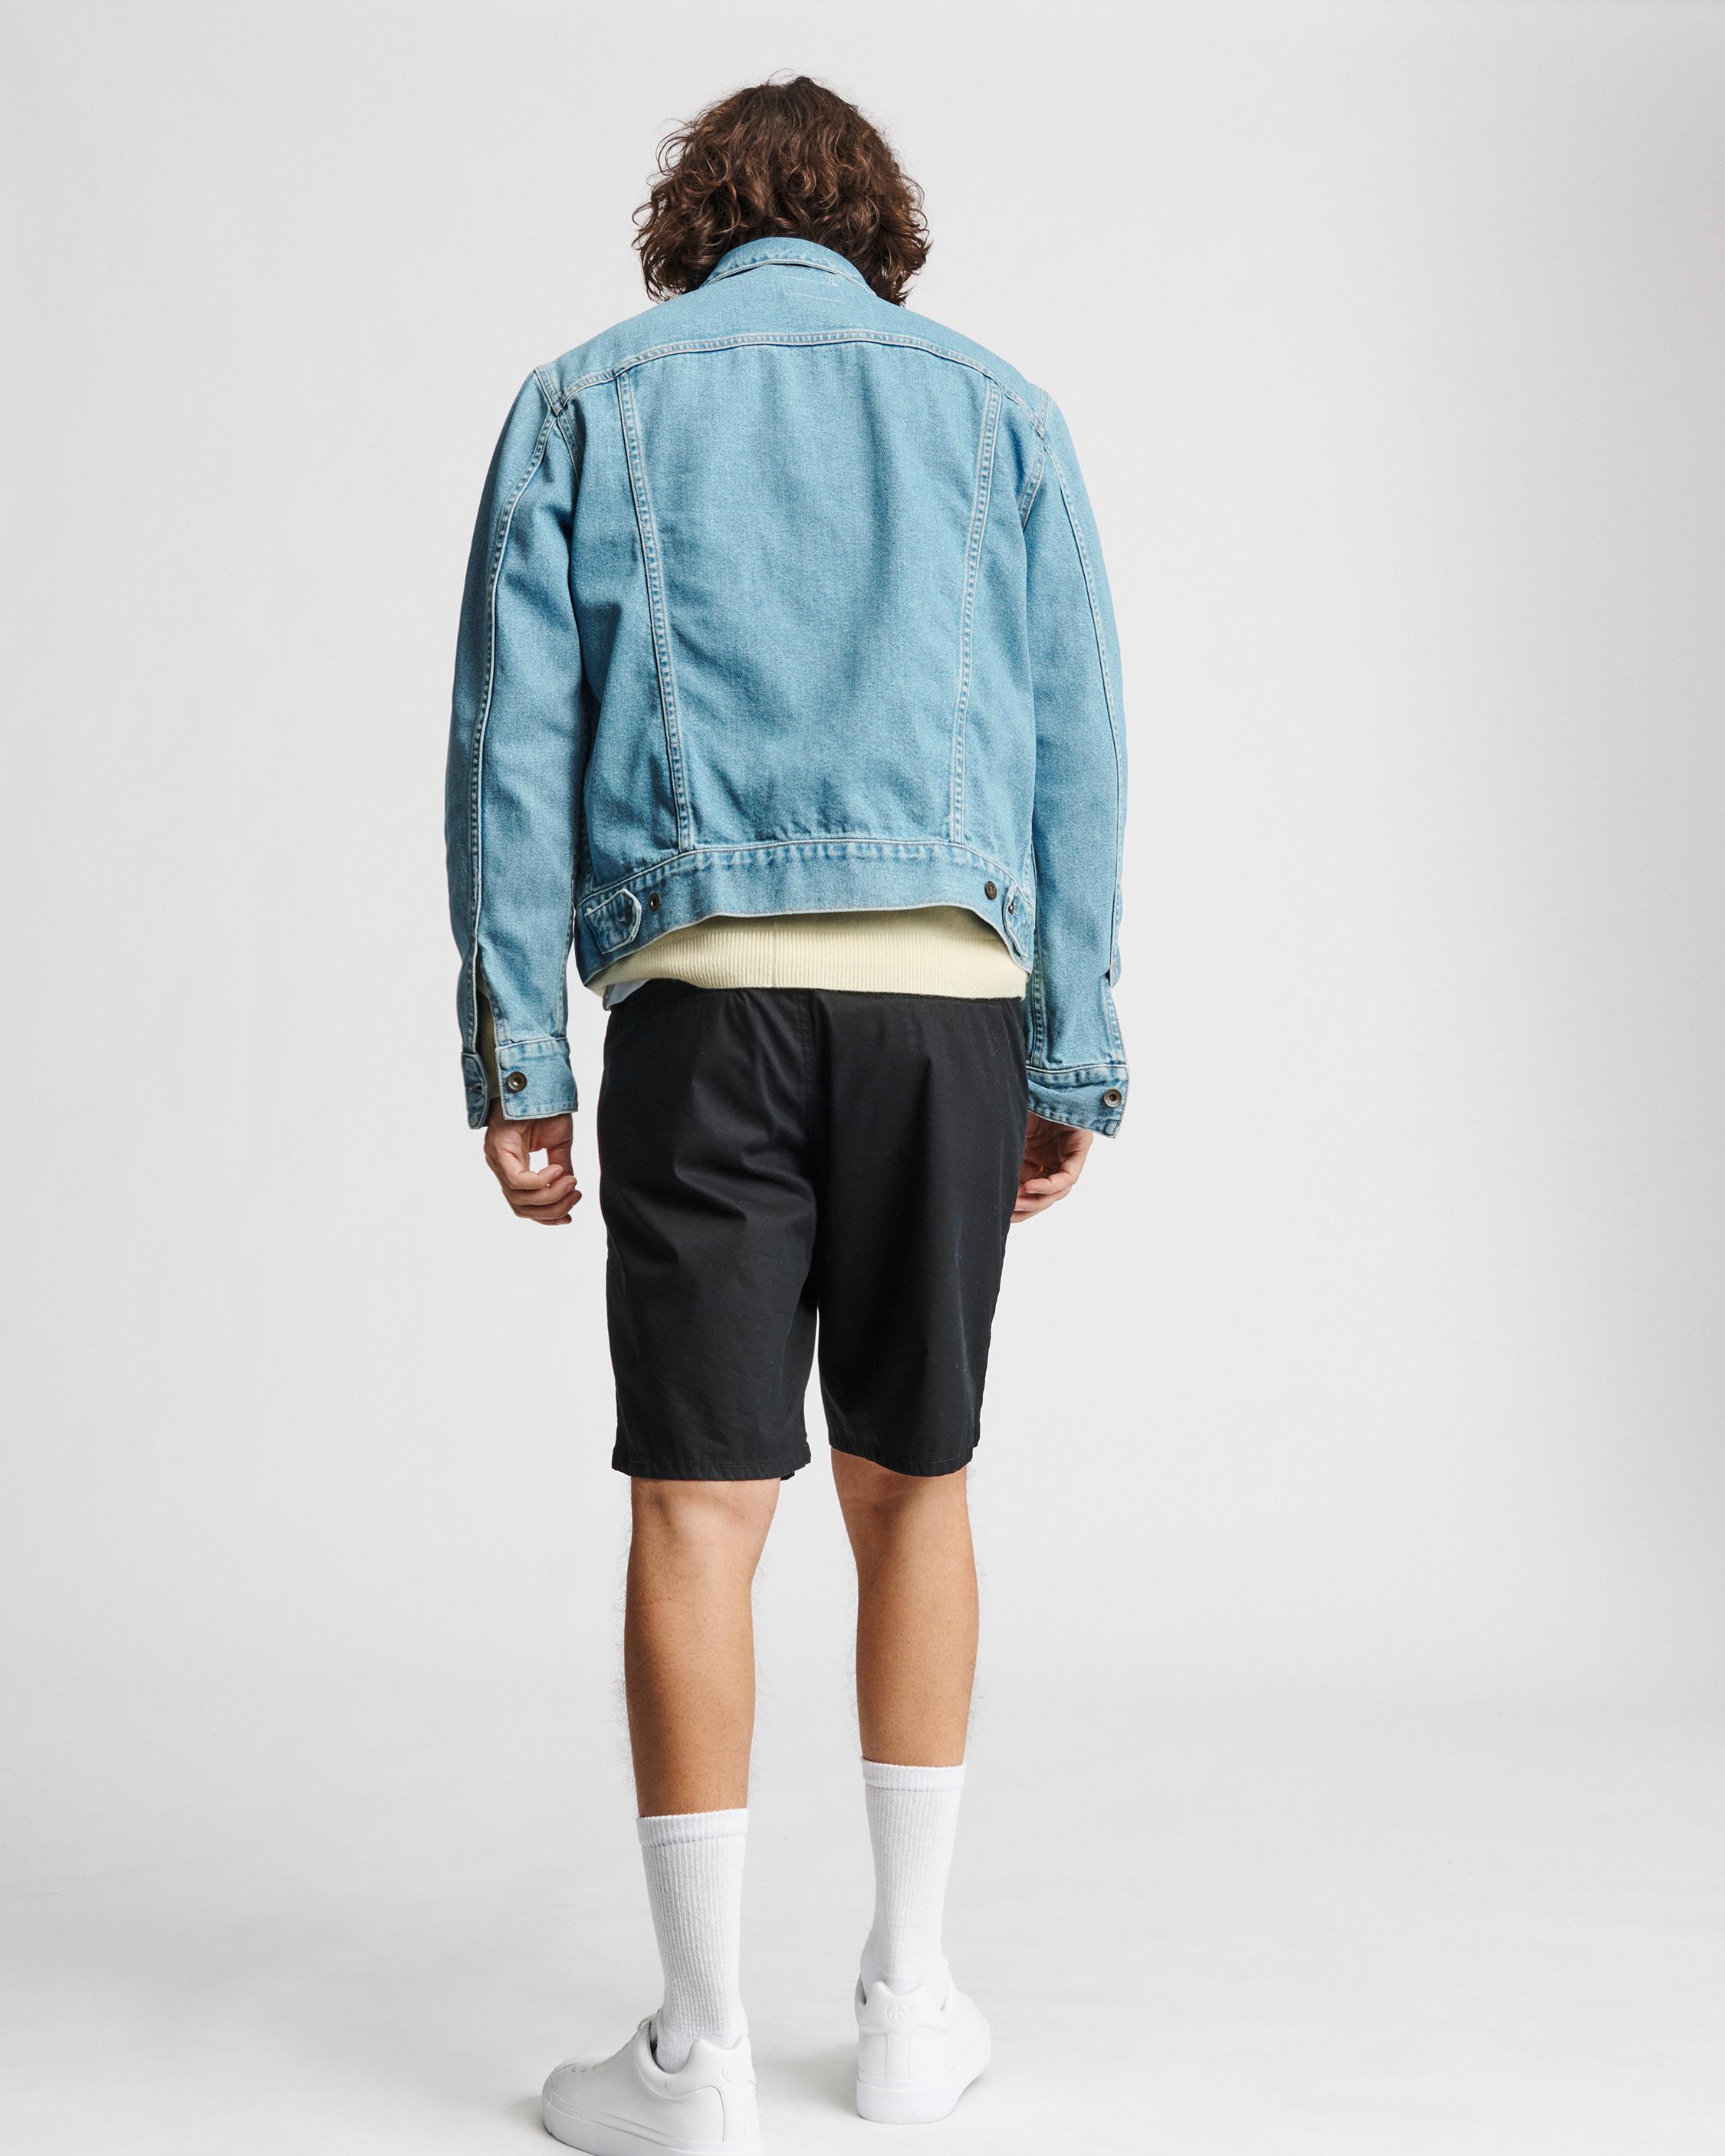 denim jacket with shorts mens